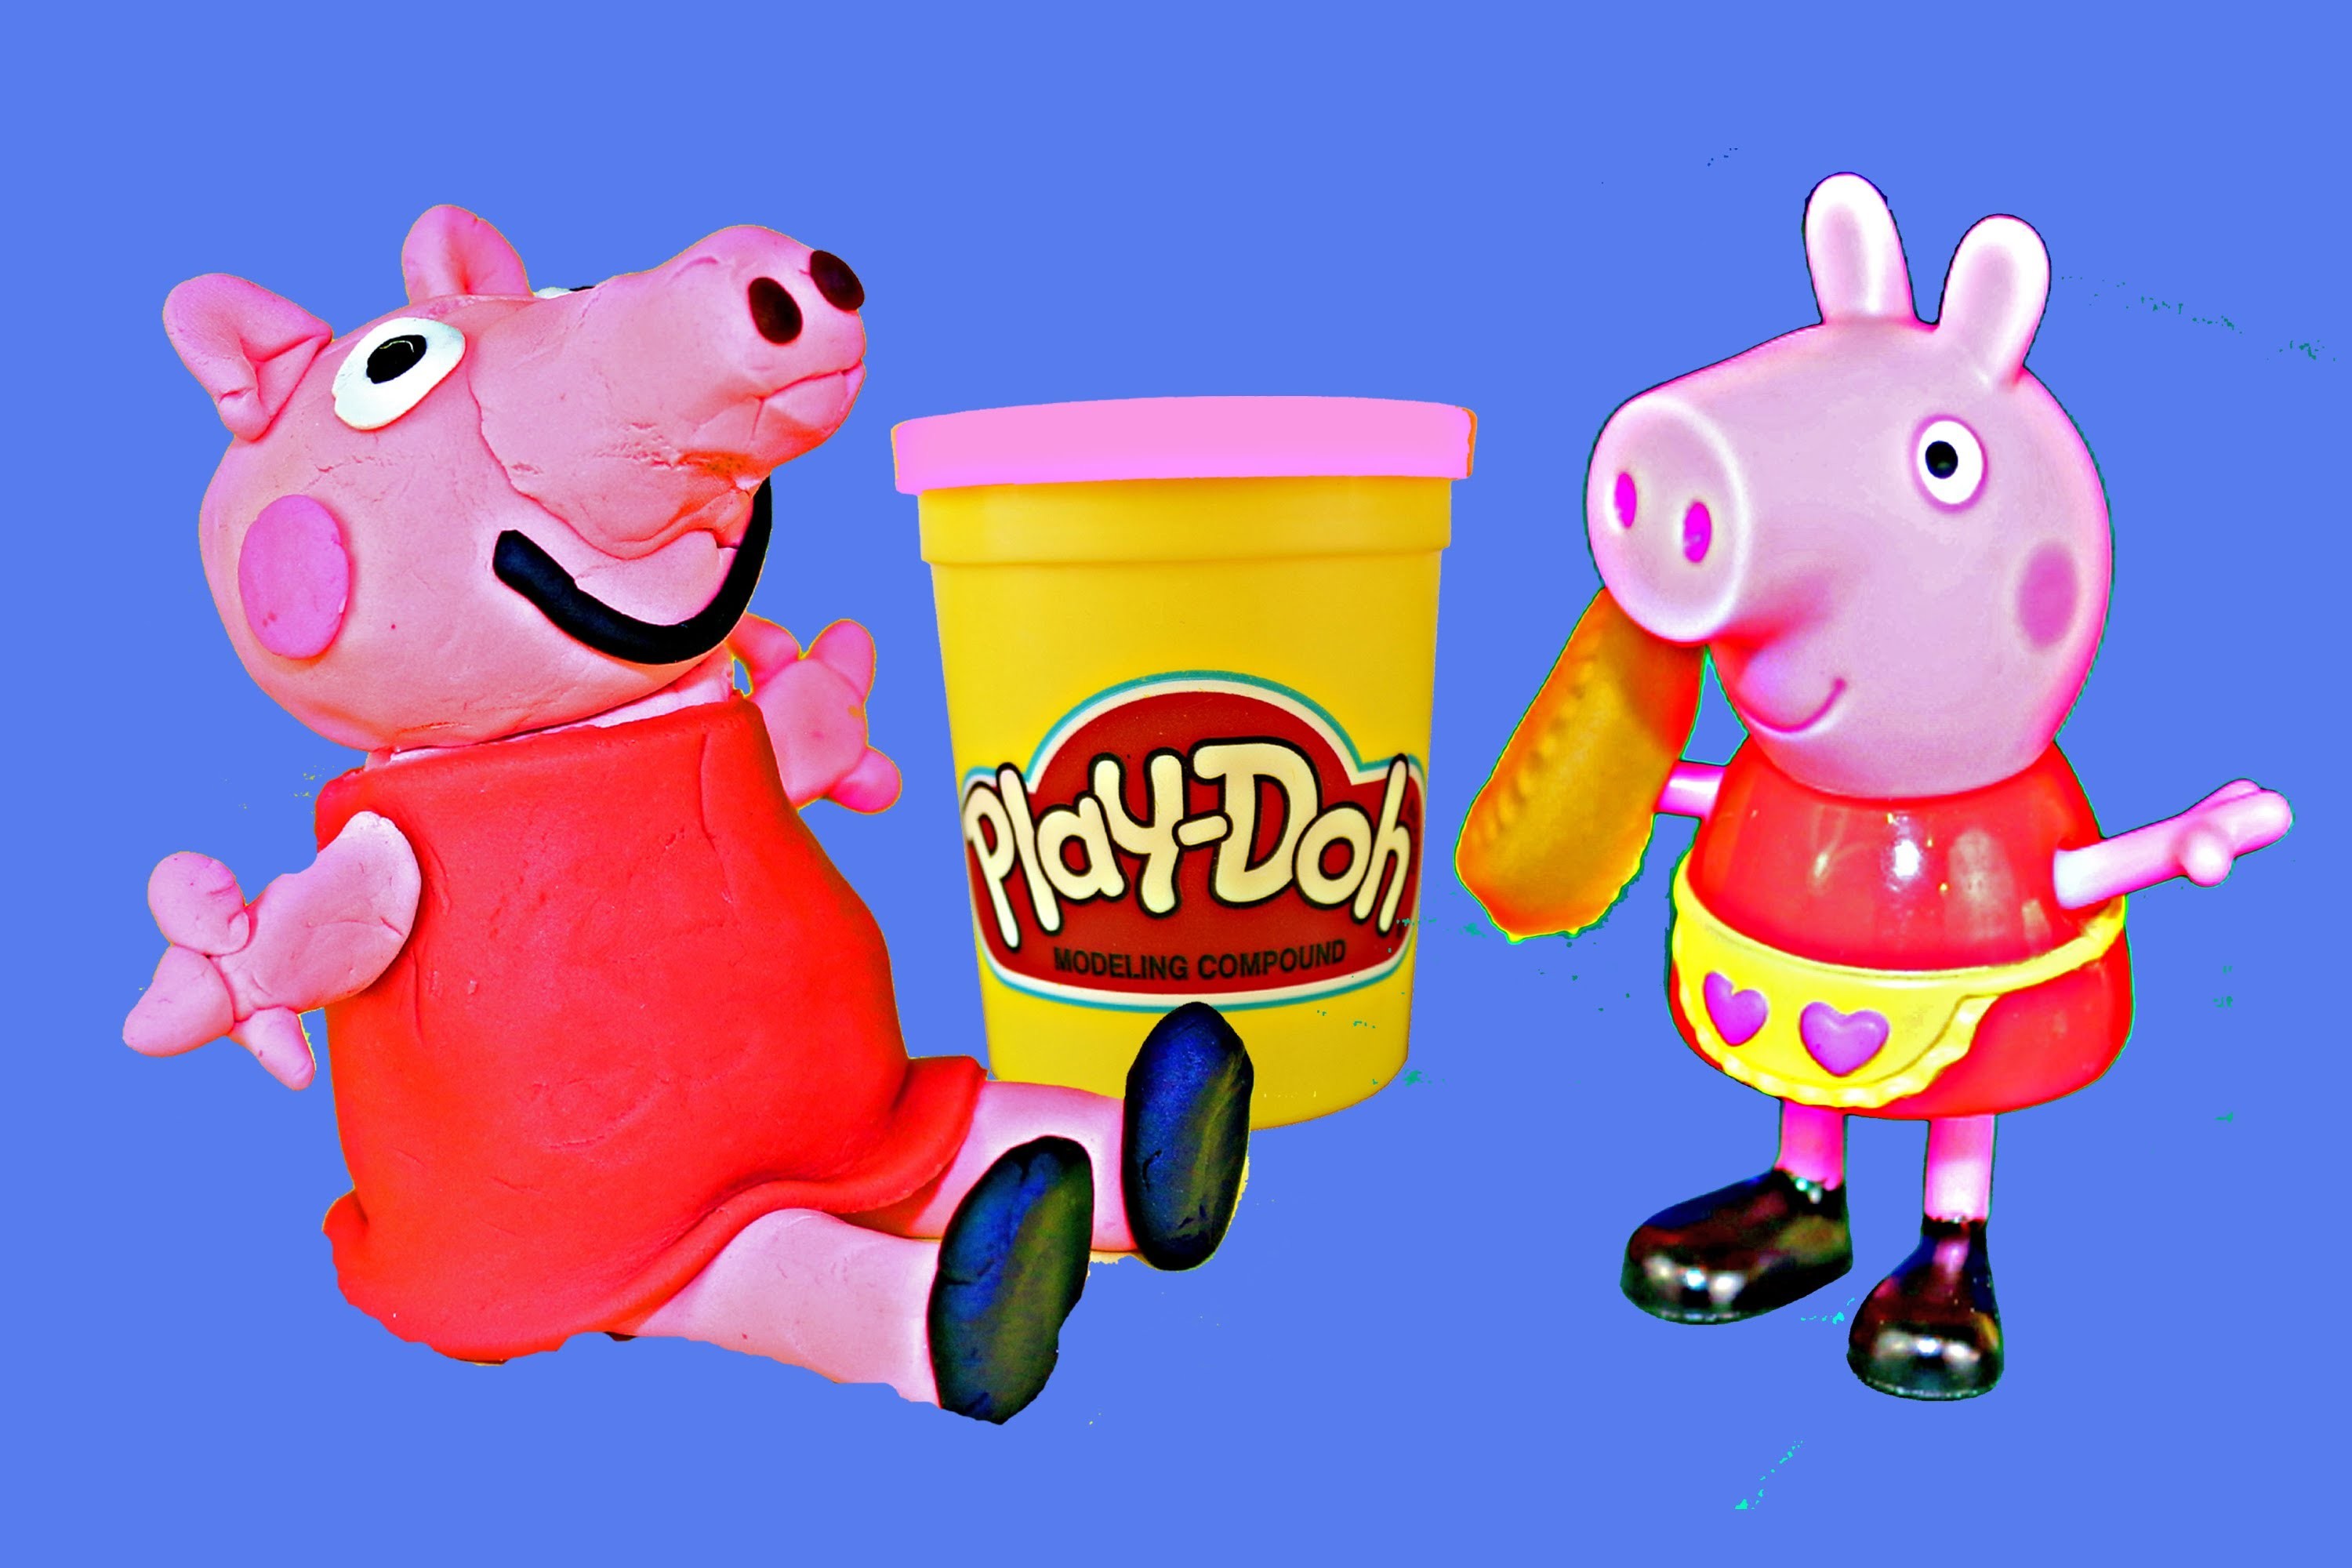 Play Doh Peppa Pig How To Make Peppa Pig with Play Dough 3D Peppa Pig Playdough Figure DisneyCarToys